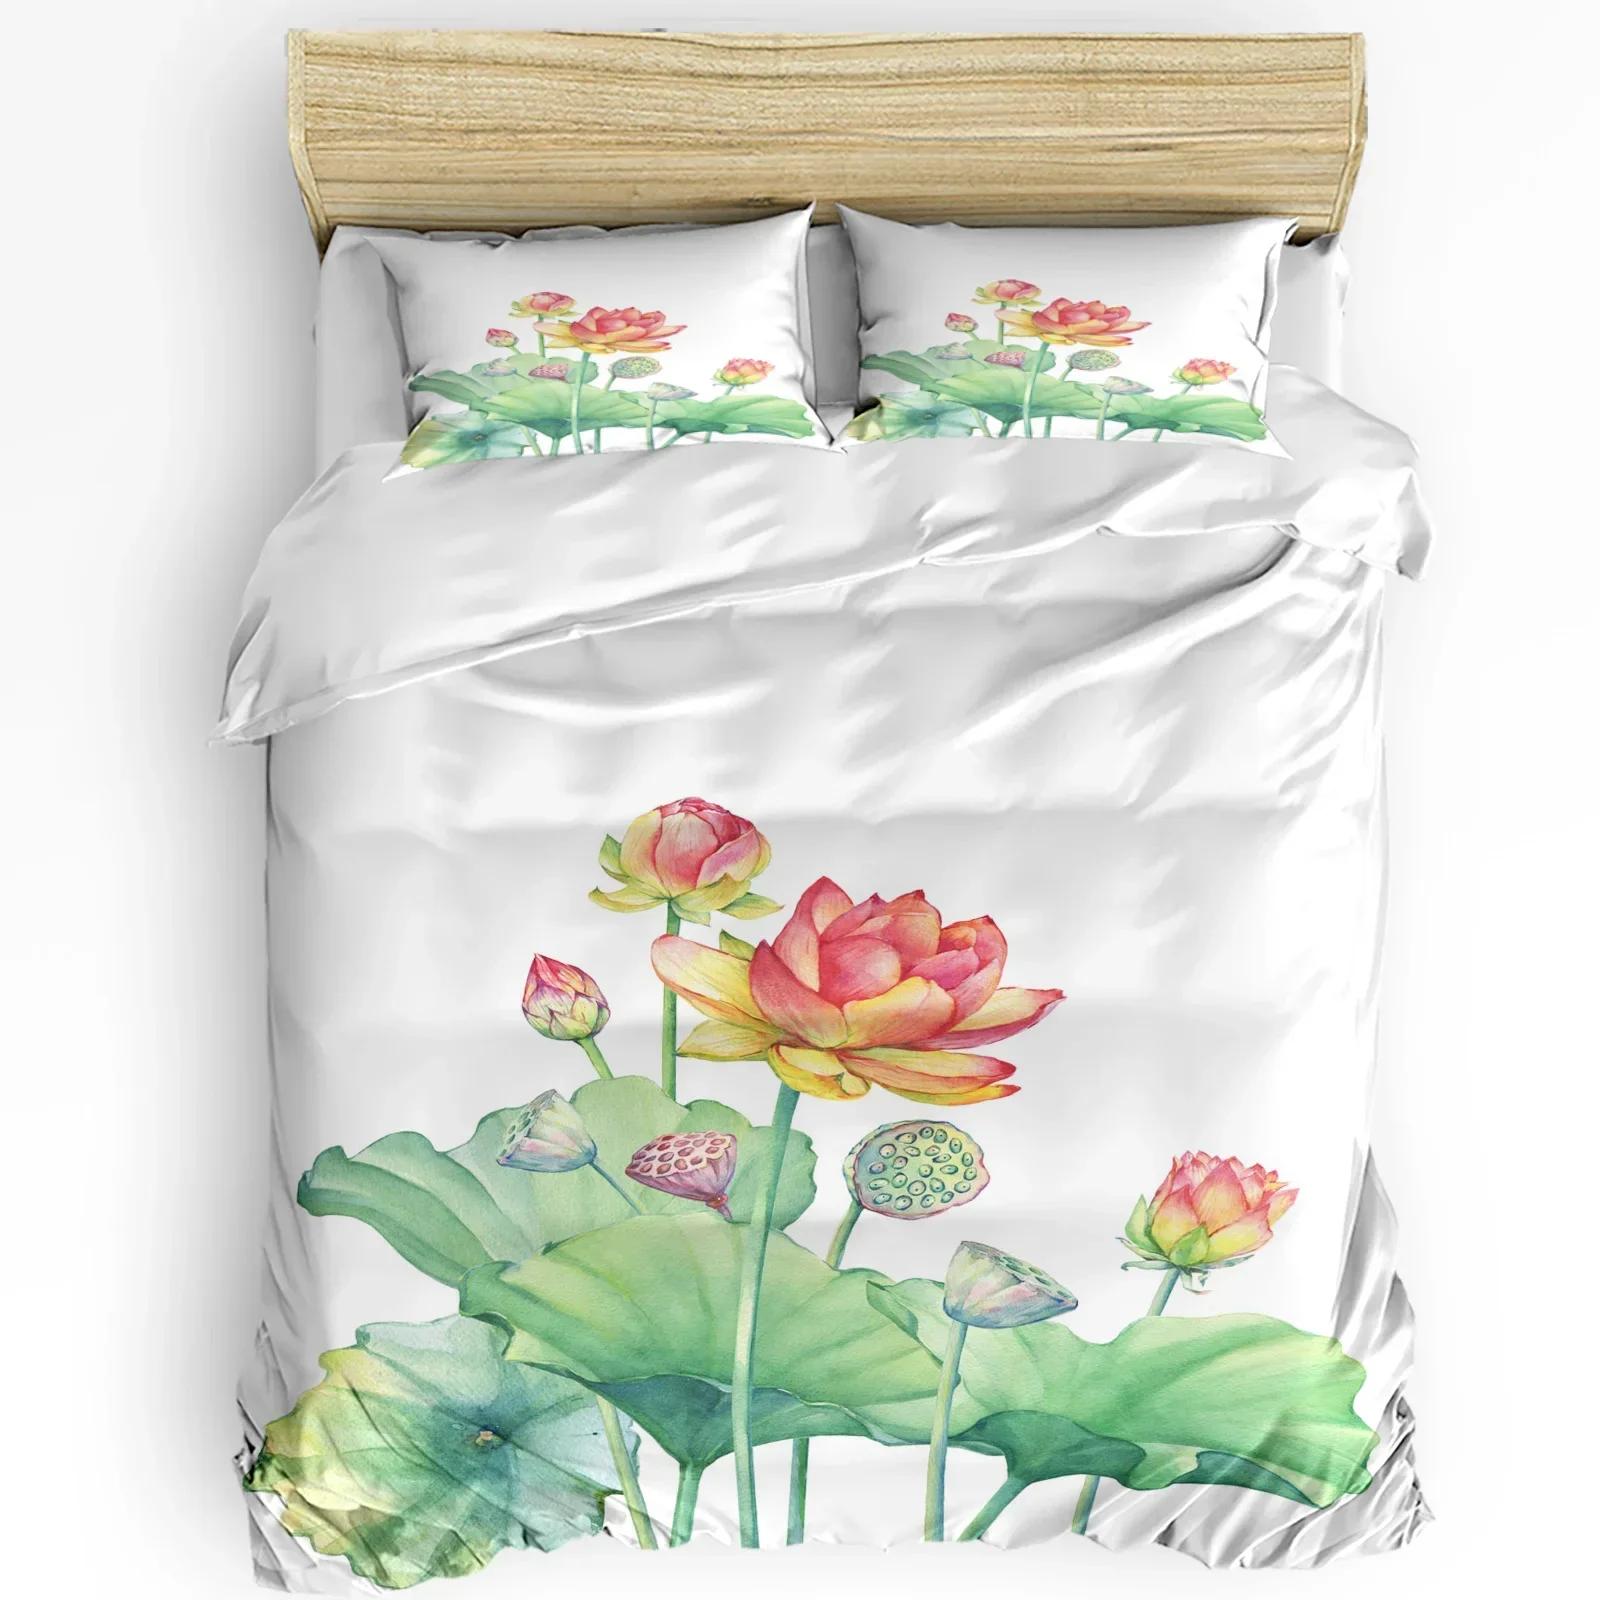 Plant Lotus Flower White Duvet Cover Bed Bedding Set Double Home Textile Quilt Cover Pillowcases Bedroom Bedding Set